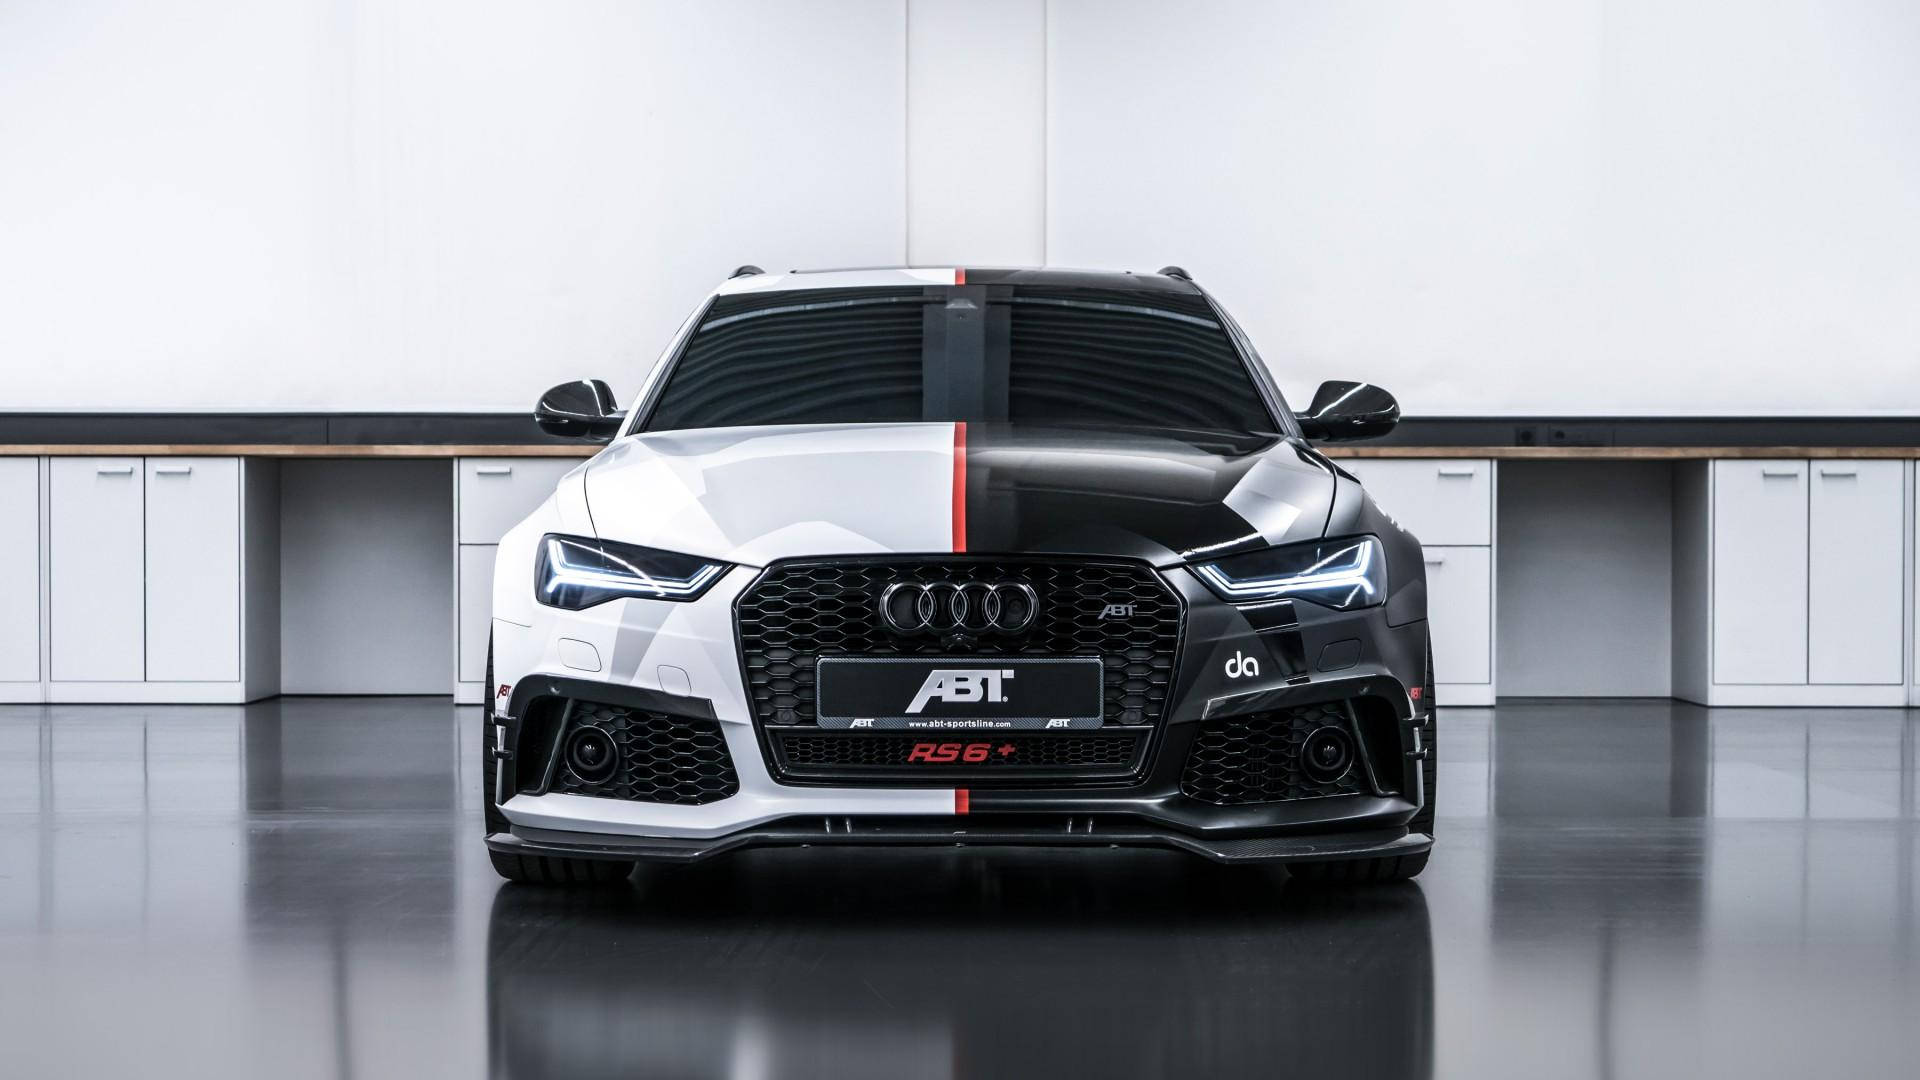 To-tonet Audi Rs Wallpaper